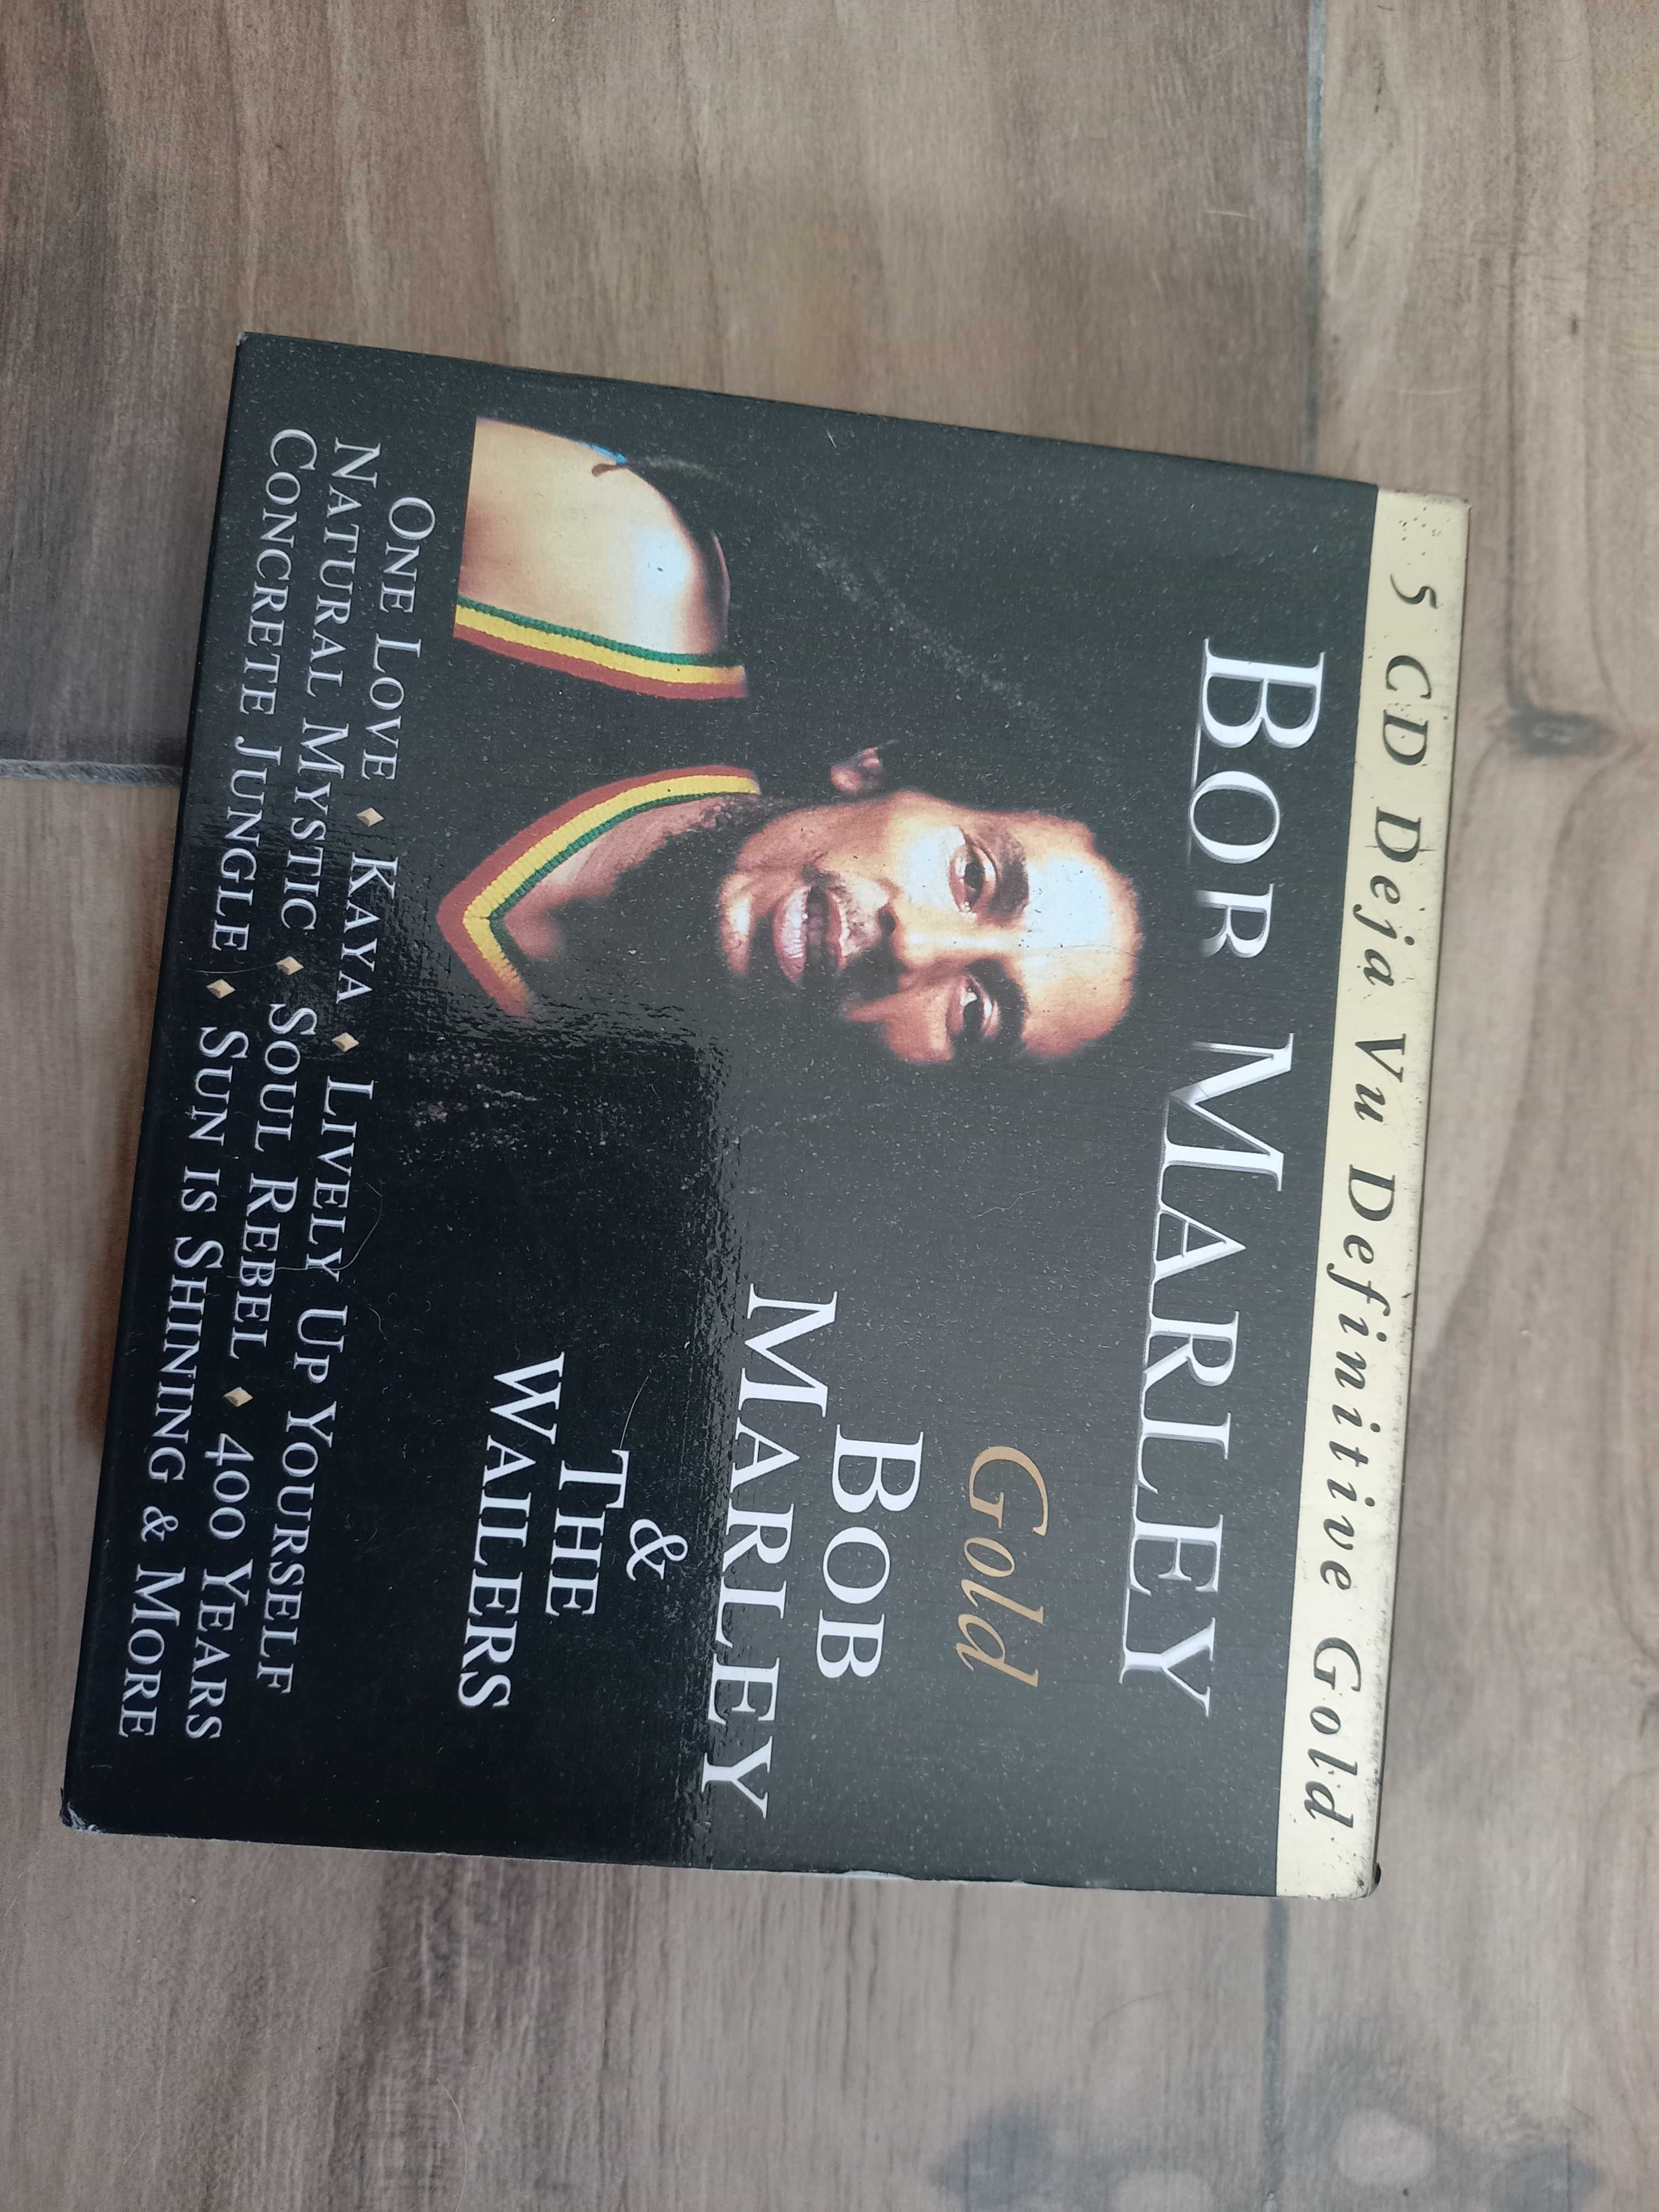 Gold Bob Marley and the wailers